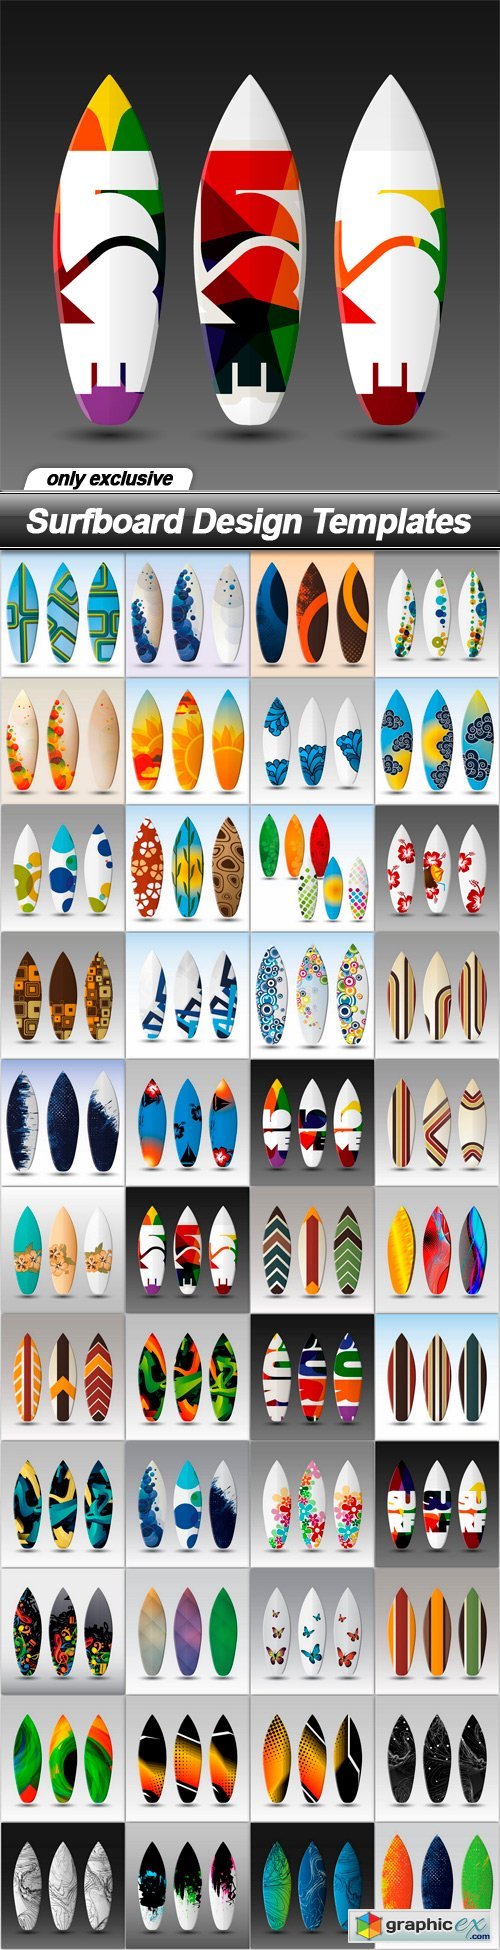 Surfboard Design Templates - 44 EPS